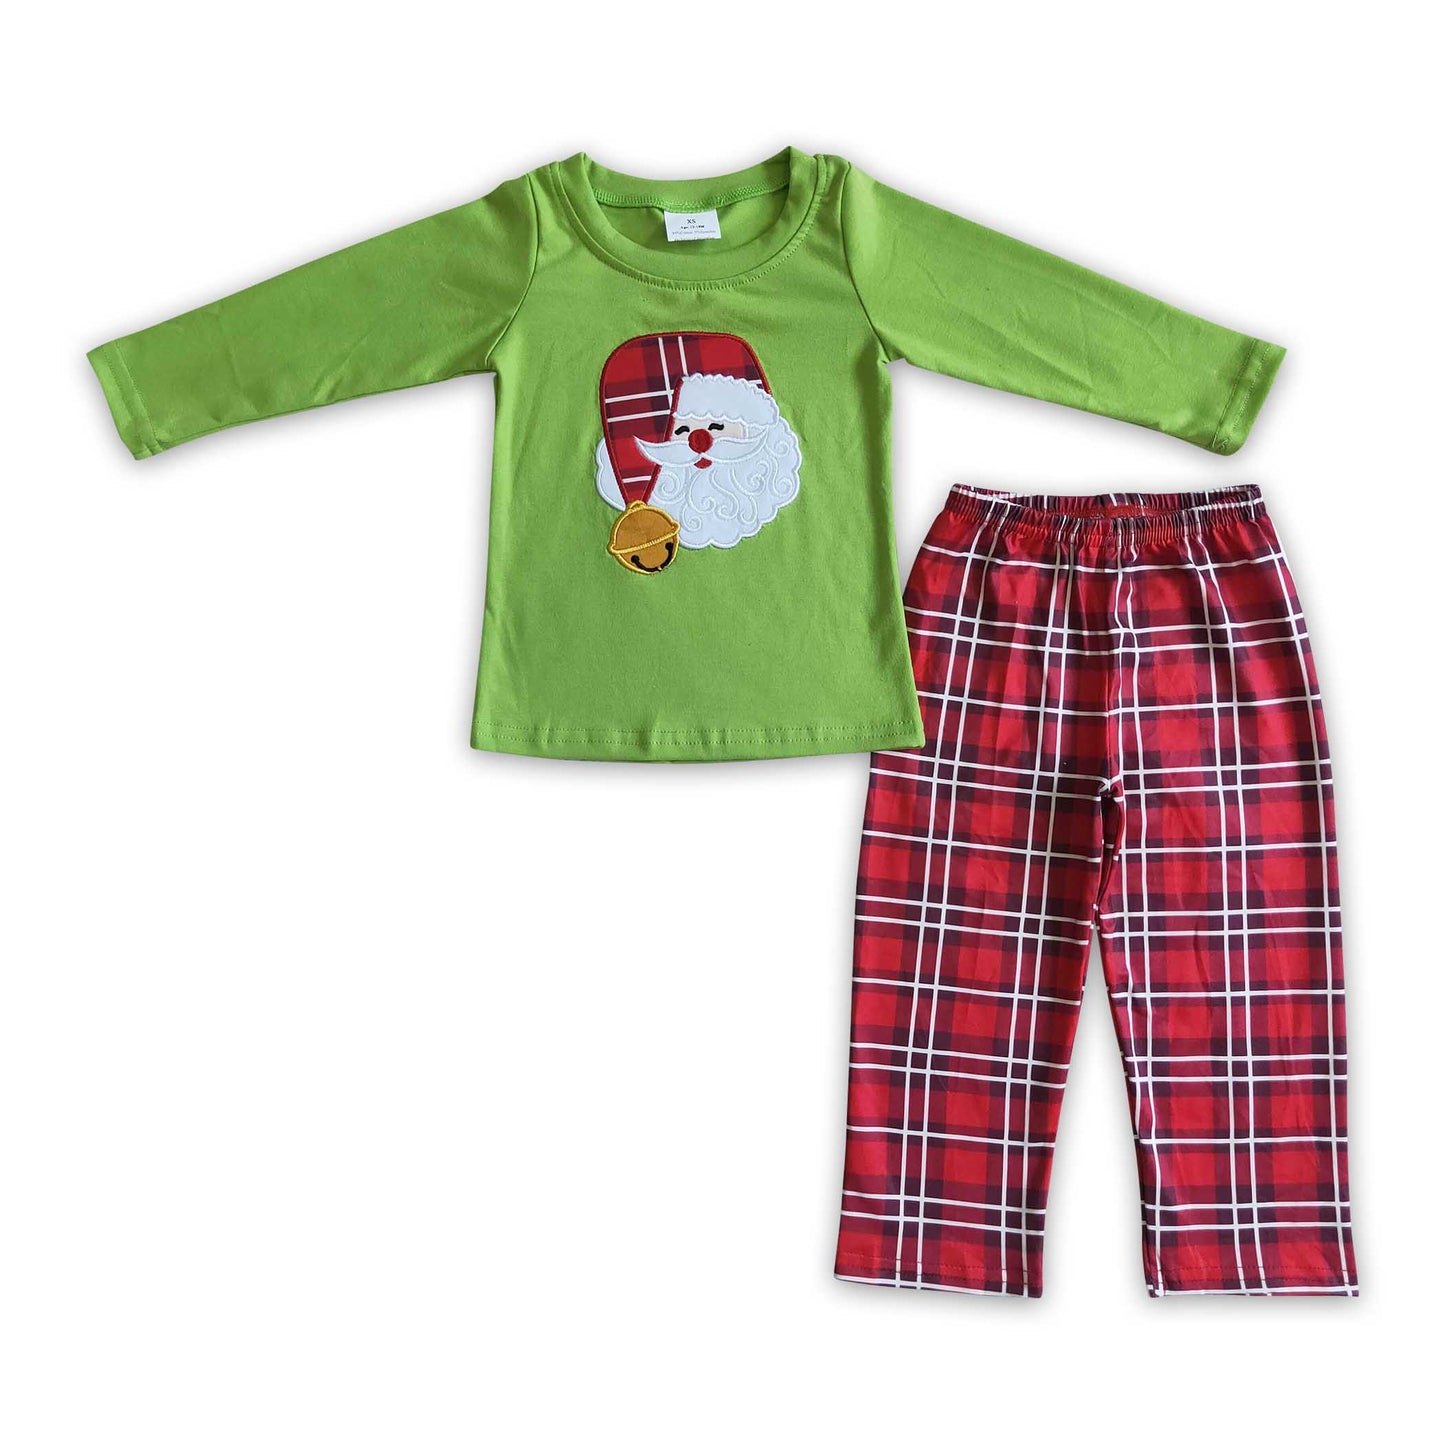 Santa embroidery shirt plaid pants boy Christmas outfits